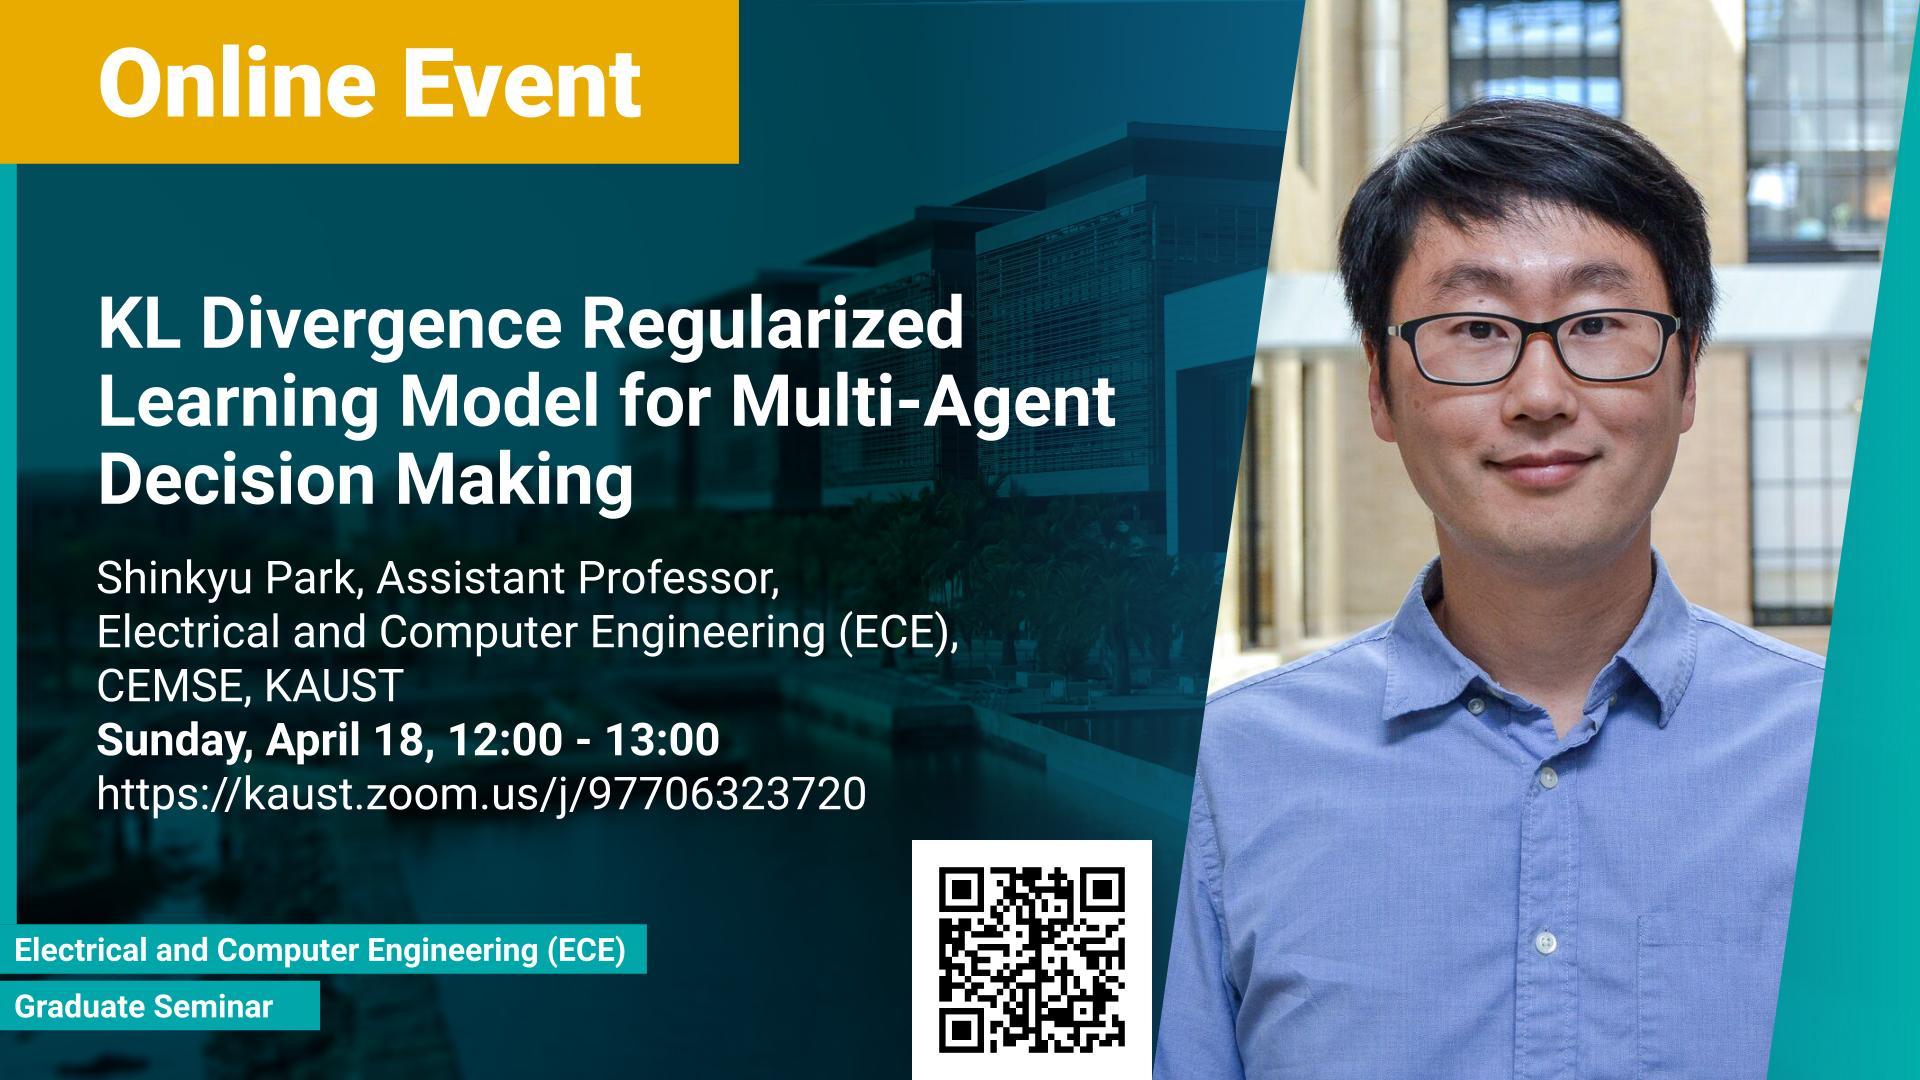 KAUST-CEMSE-ECE-Graduate Seminar-Shinkyu-Park-KL-Divergence-Regularized-Learning-Model-for-Multi-Agent-Decision-Making.jpg